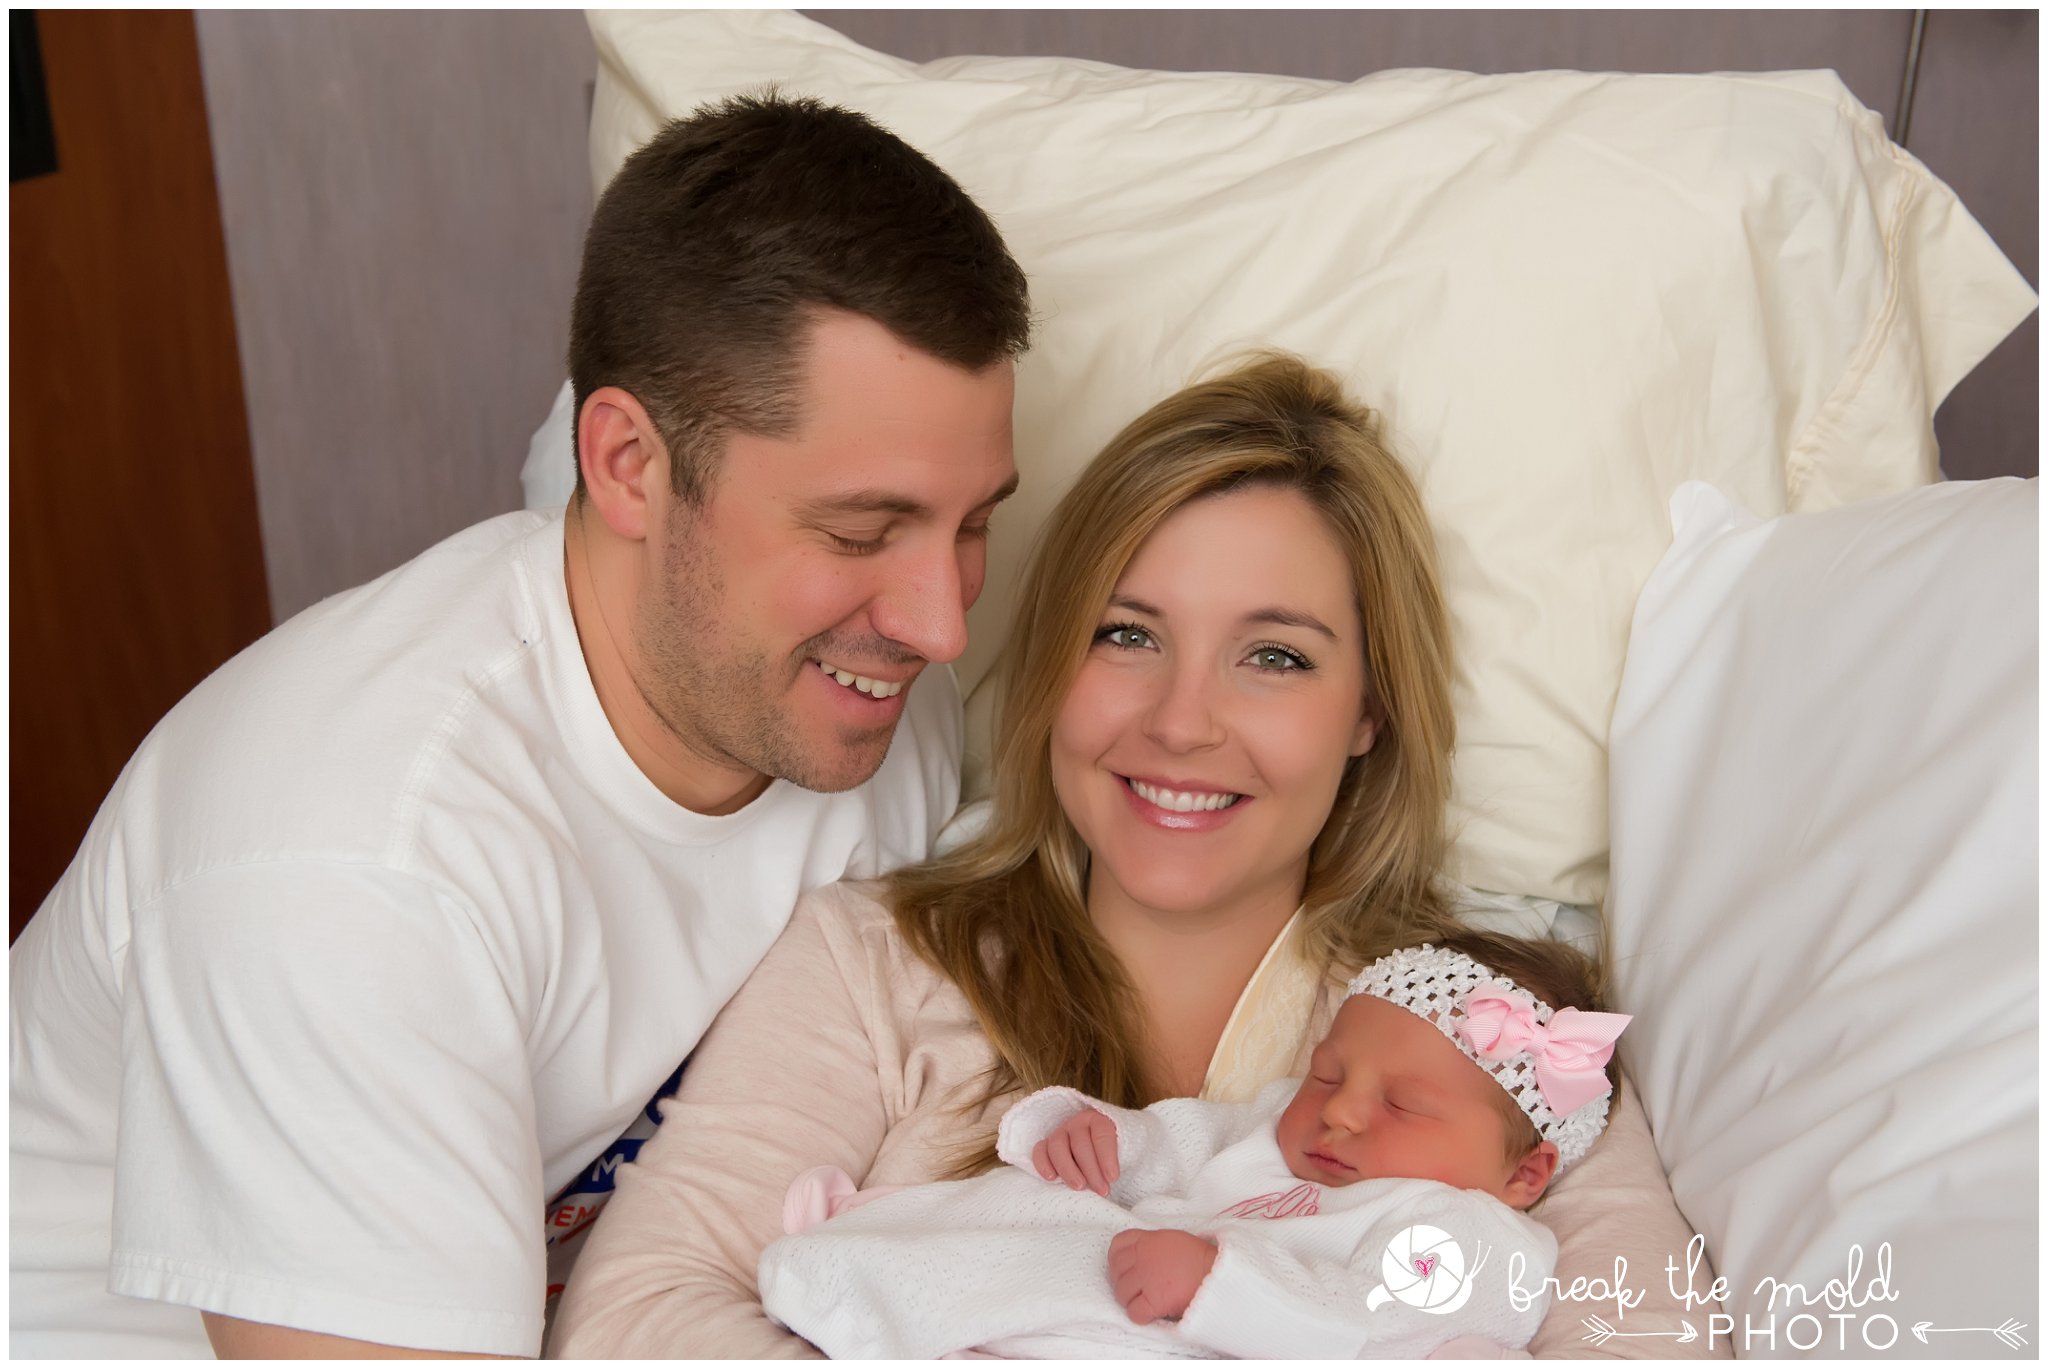 fresh-24-newborn-in-hospital-break-the-mold-photo-baby-girl-sweet-in-room-photos (43).jpg